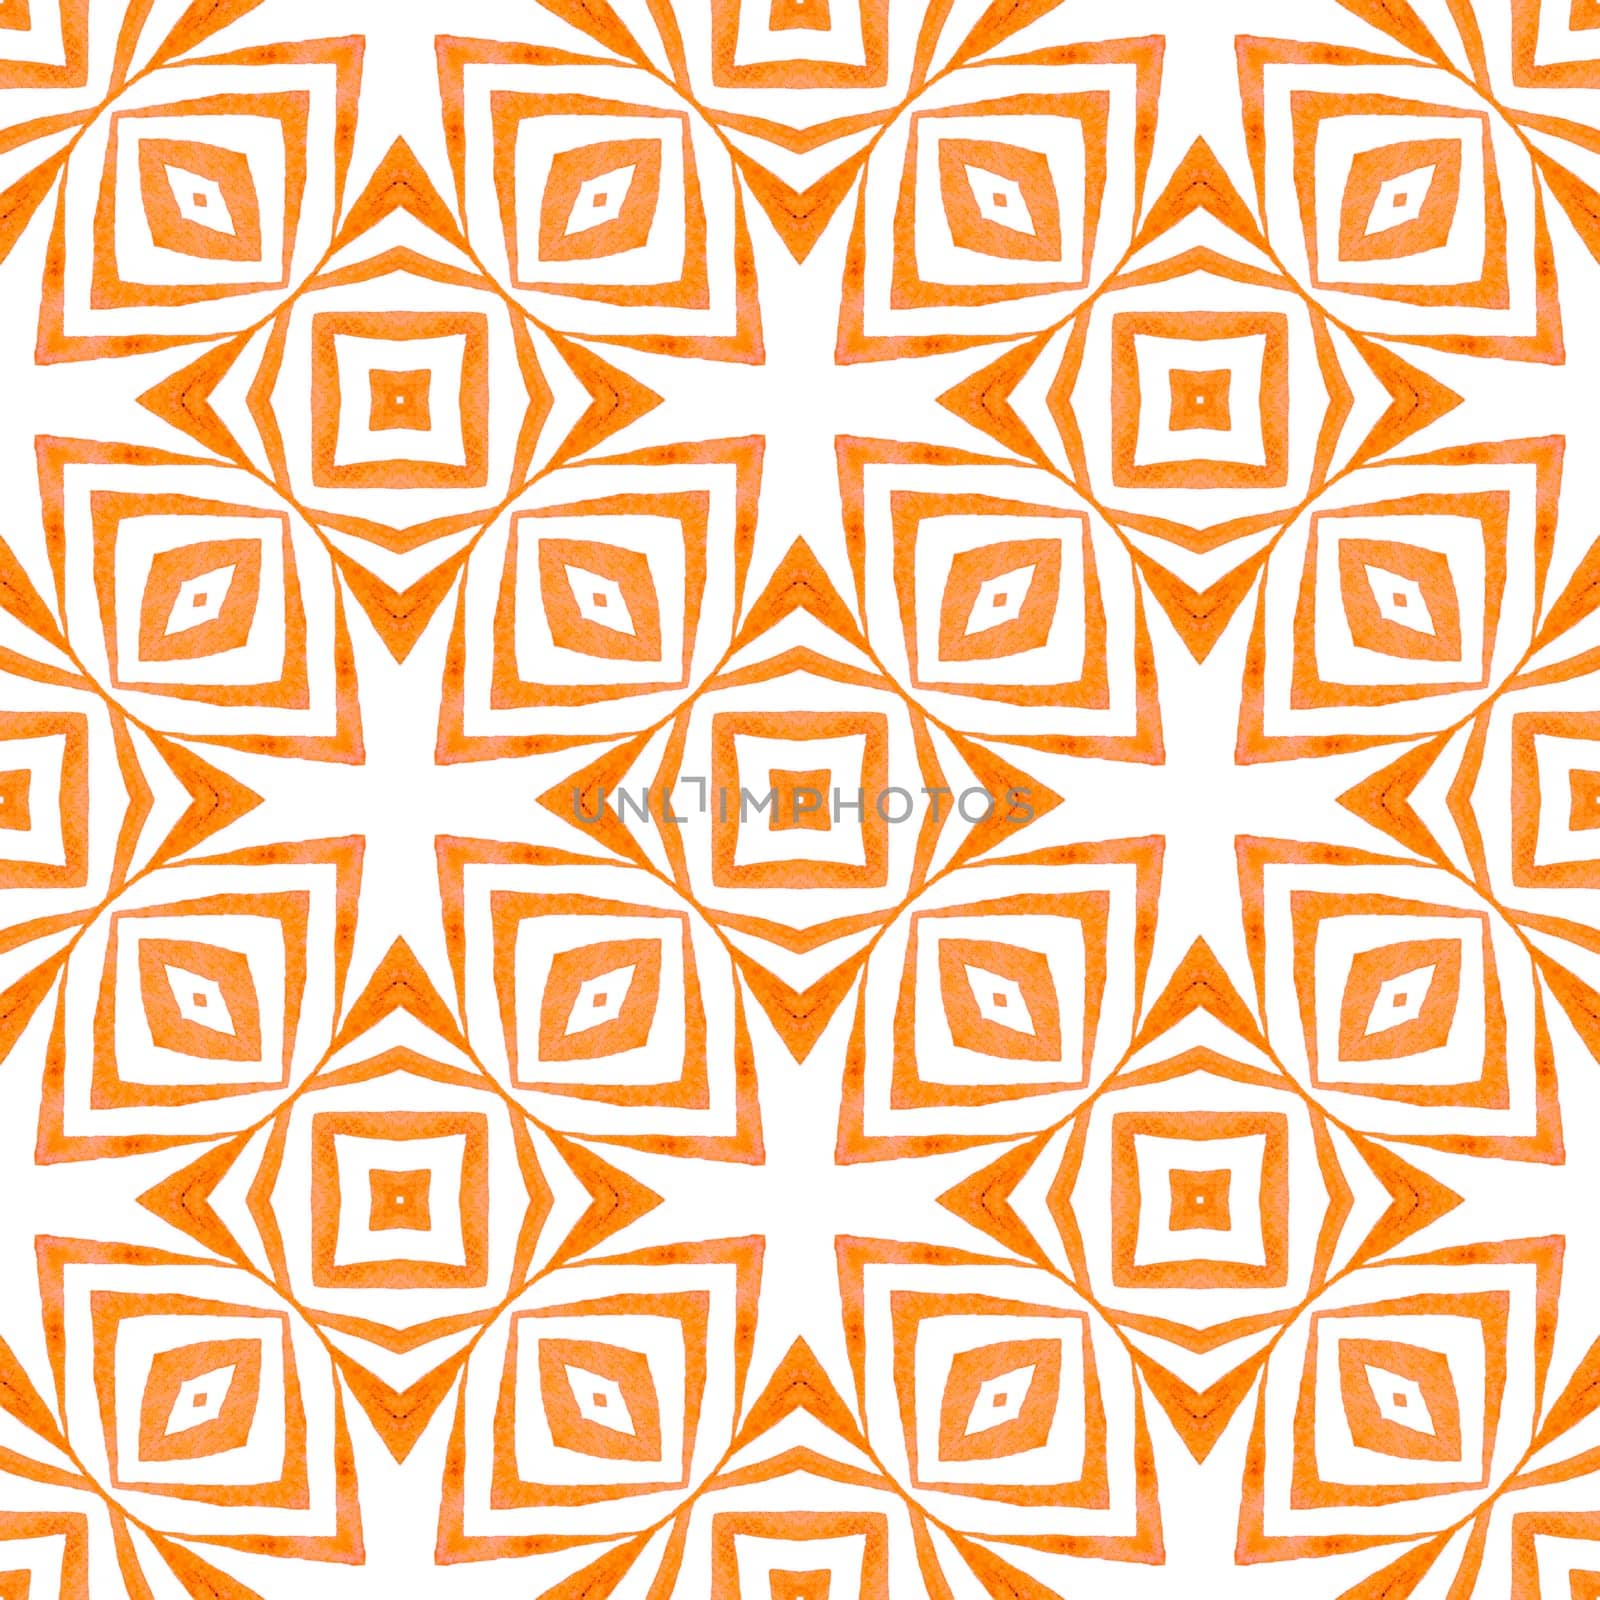 Ikat repeating swimwear design. Orange sightly boho chic summer design. Textile ready cute print, swimwear fabric, wallpaper, wrapping. Watercolor ikat repeating tile border.